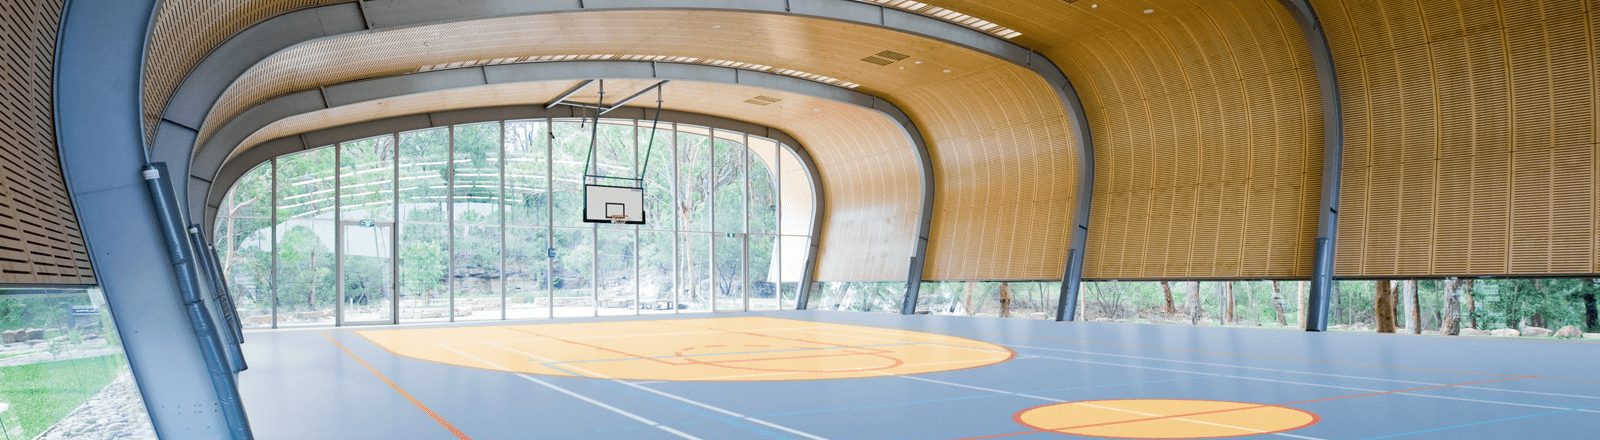 Multi purpose sports hall with sports flooring